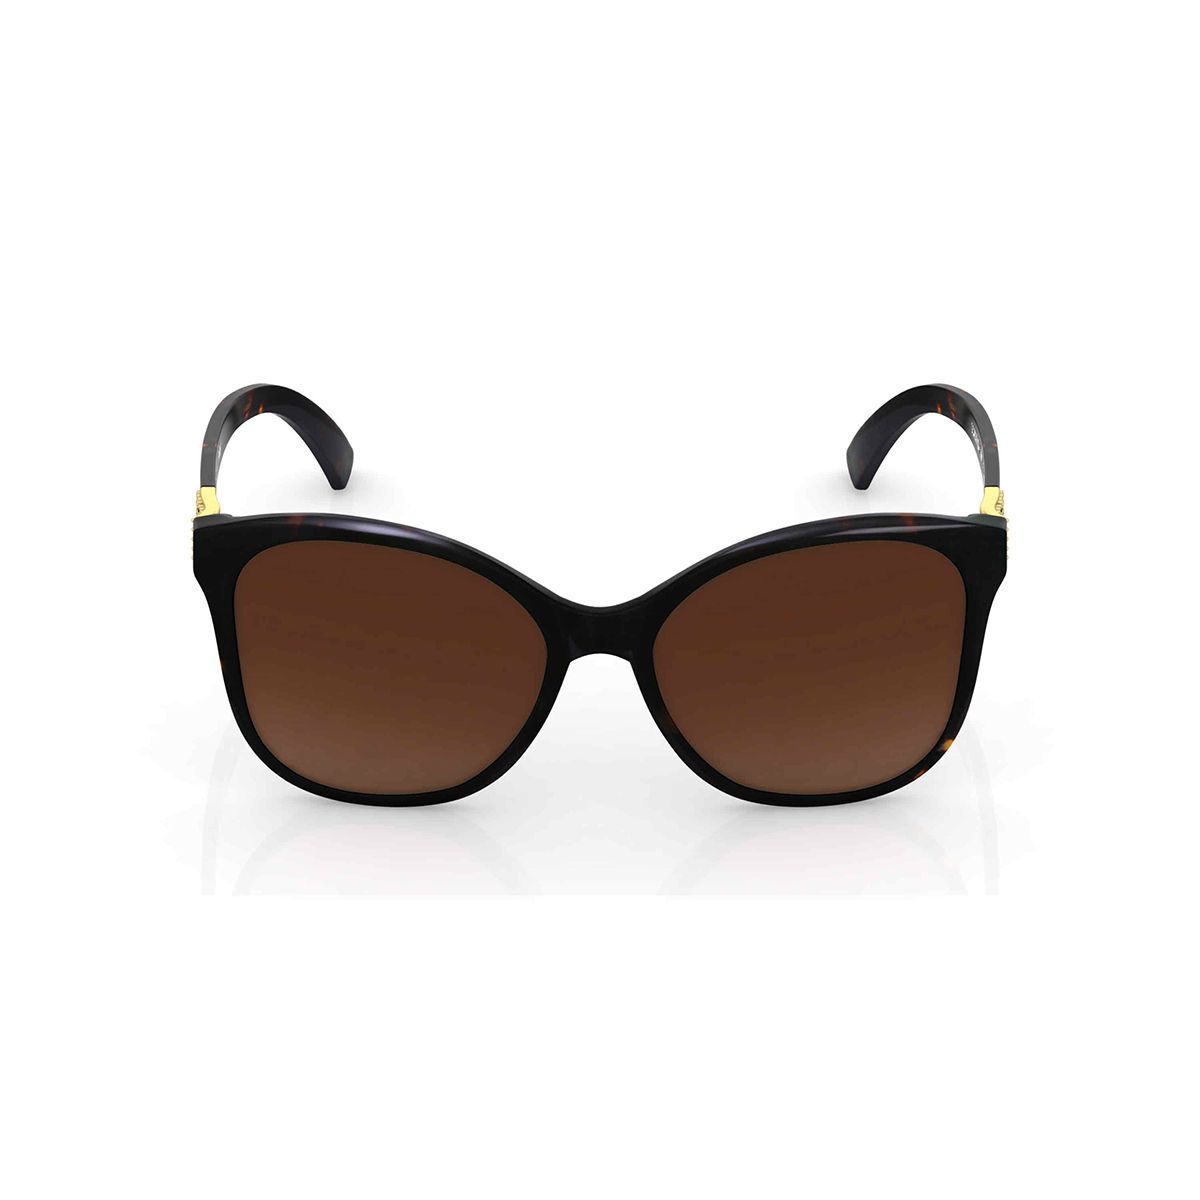 Aggregate more than 150 small womens sunglasses